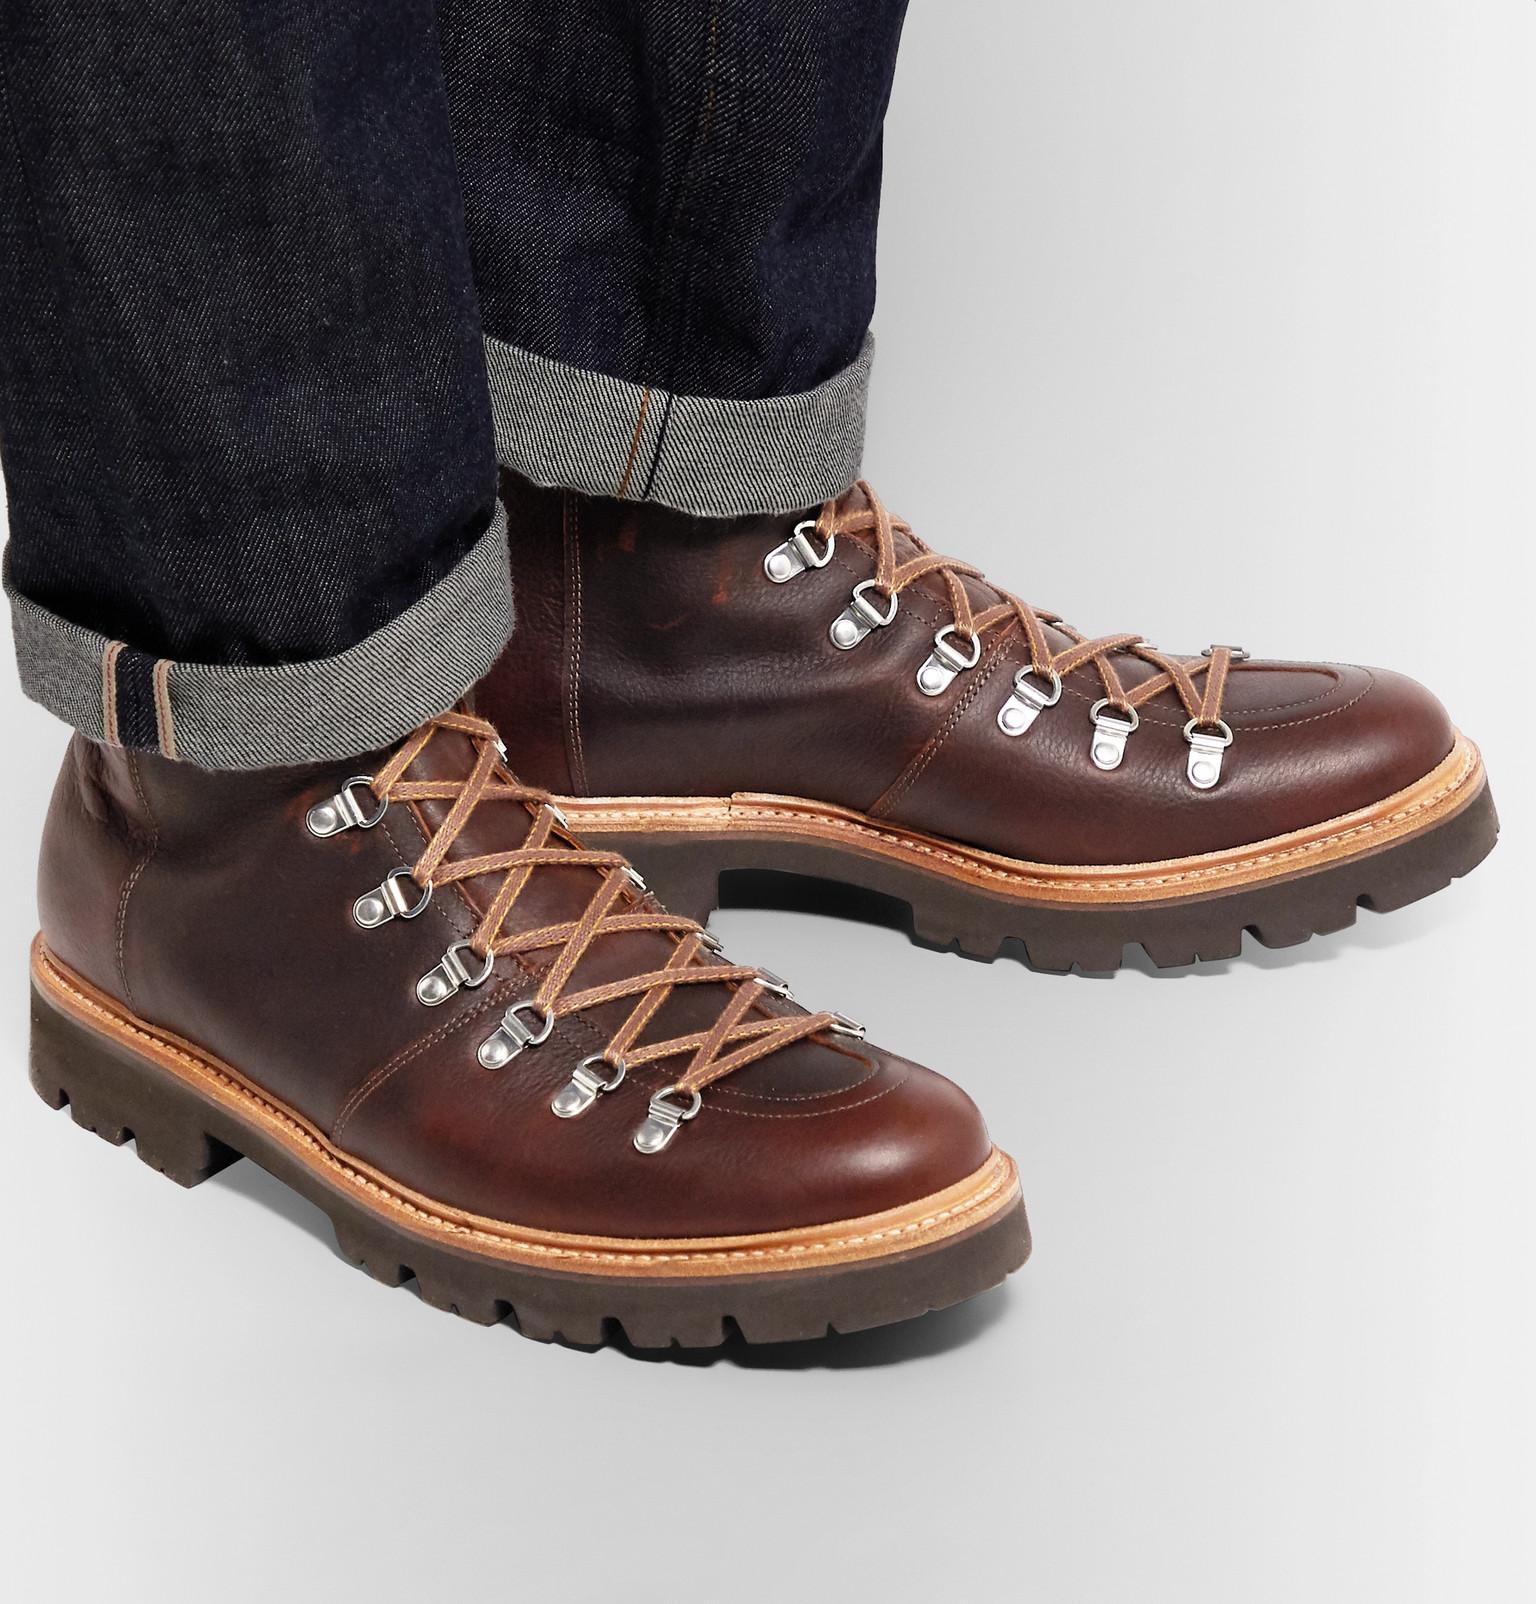 Grenson Brady Full-grain Leather Boots in Brown for Men - Lyst